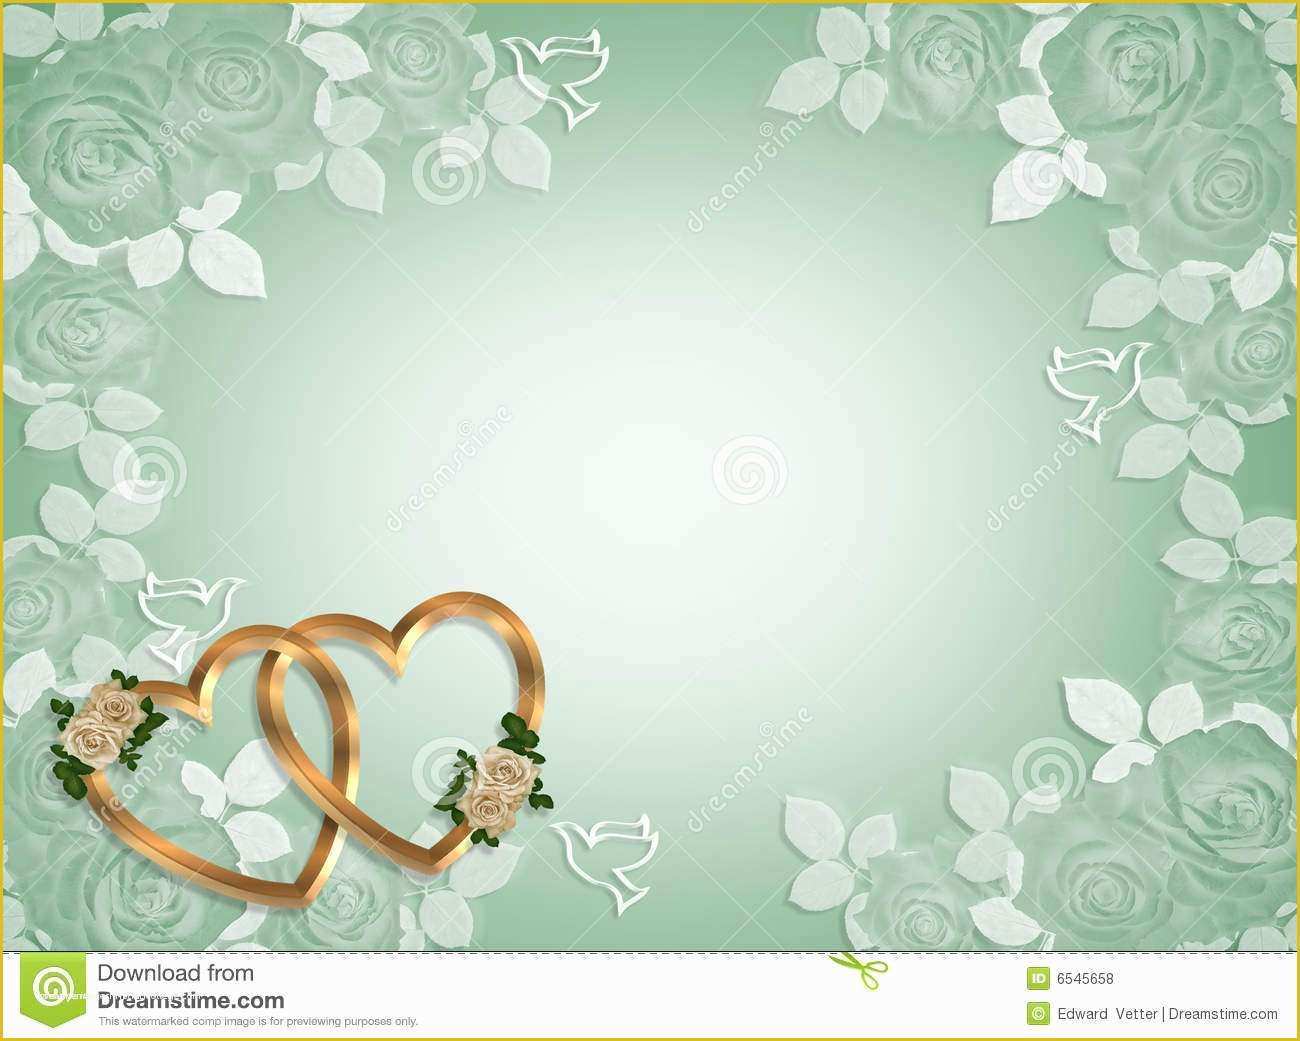 Wedding Invitation Design Templates Free Download Of Wedding Invitation Background Designs Free Luxury